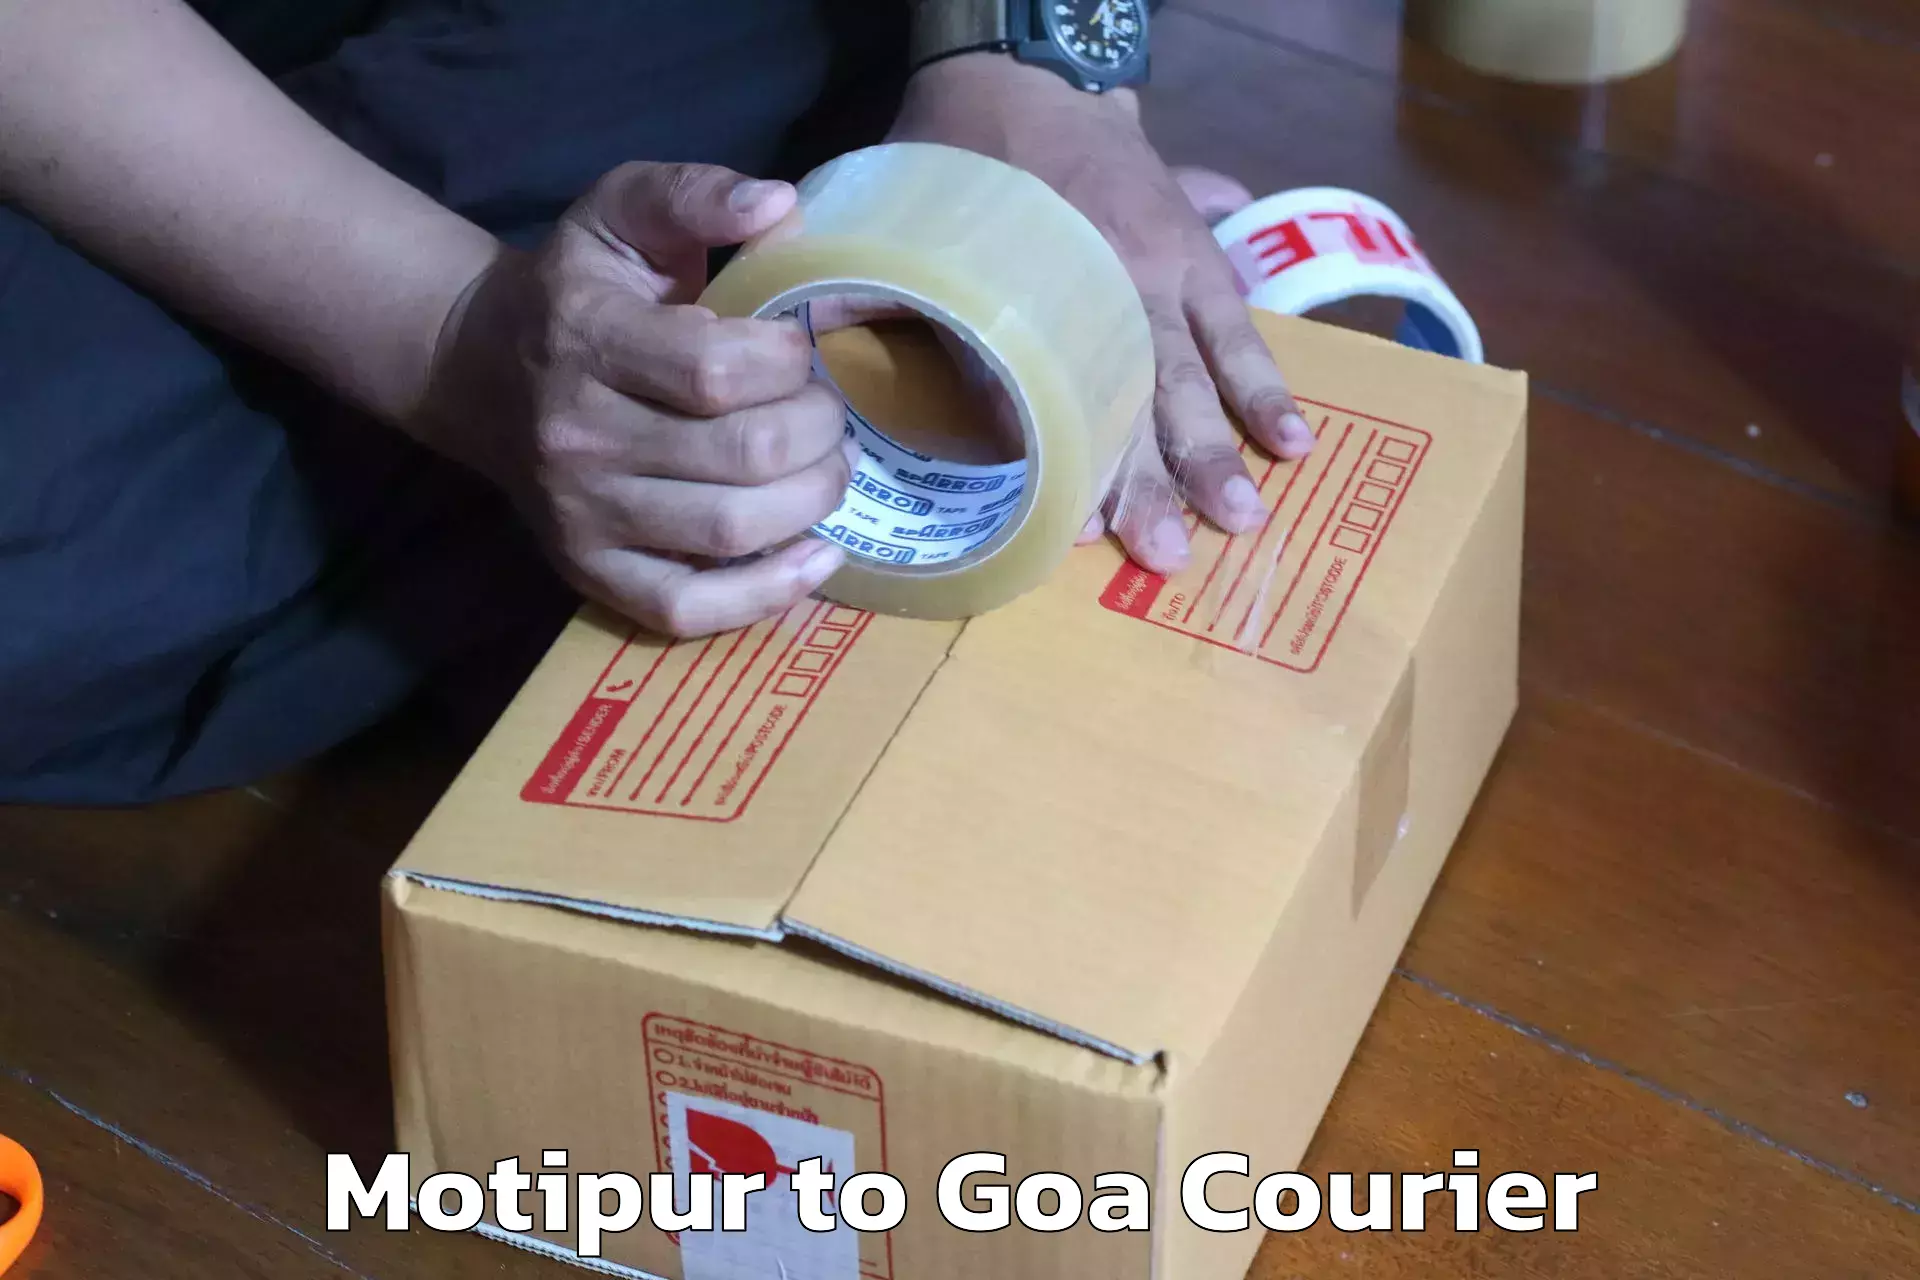 Professional moving company Motipur to Goa